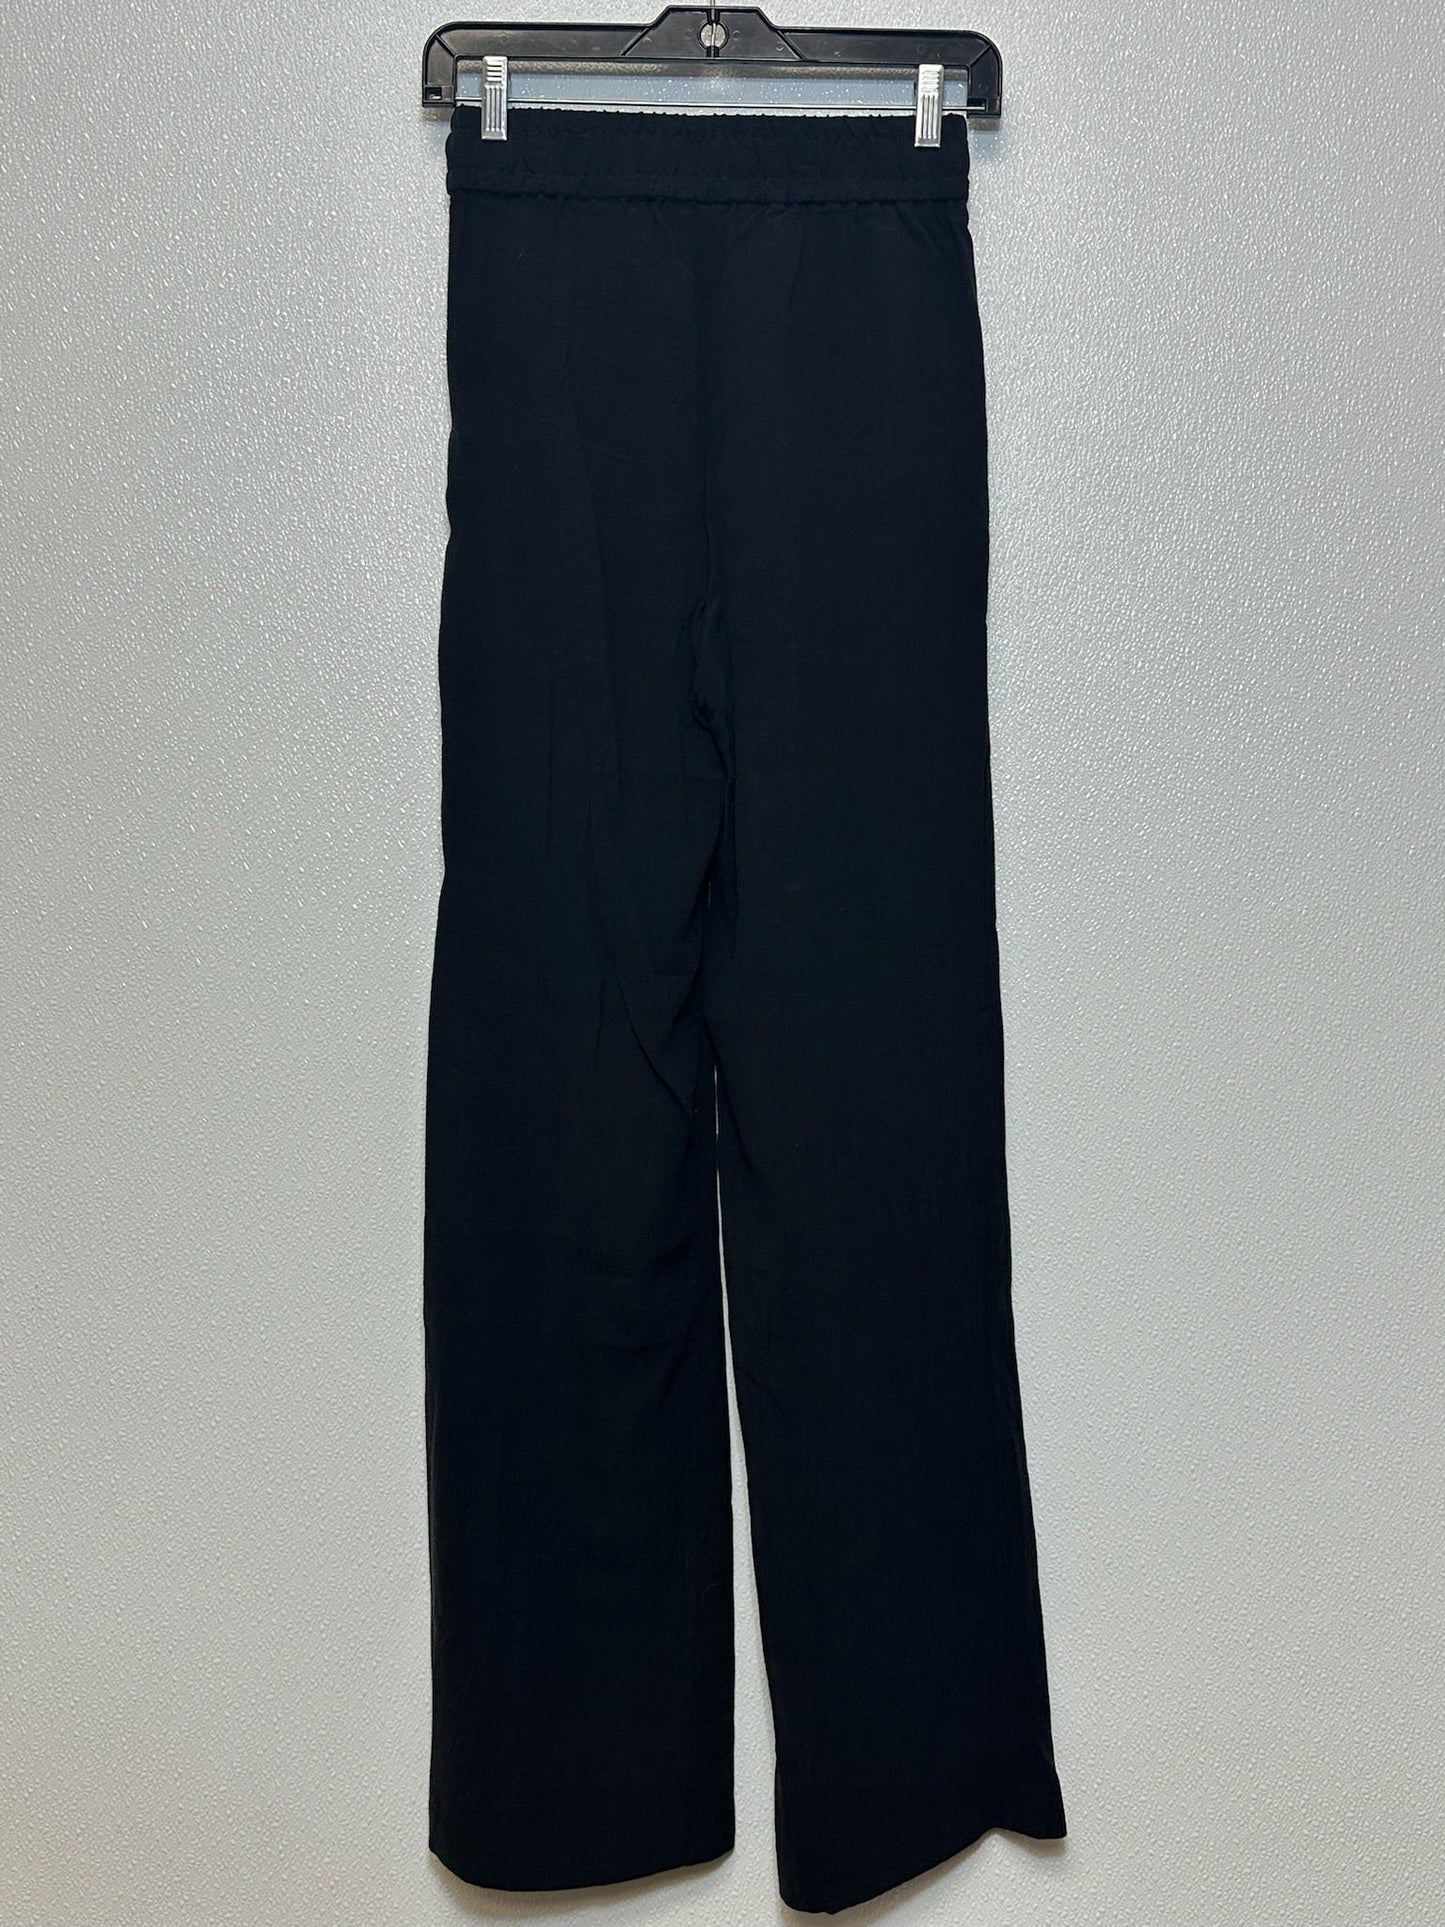 Black Pants Ankle H&m, Size Xs